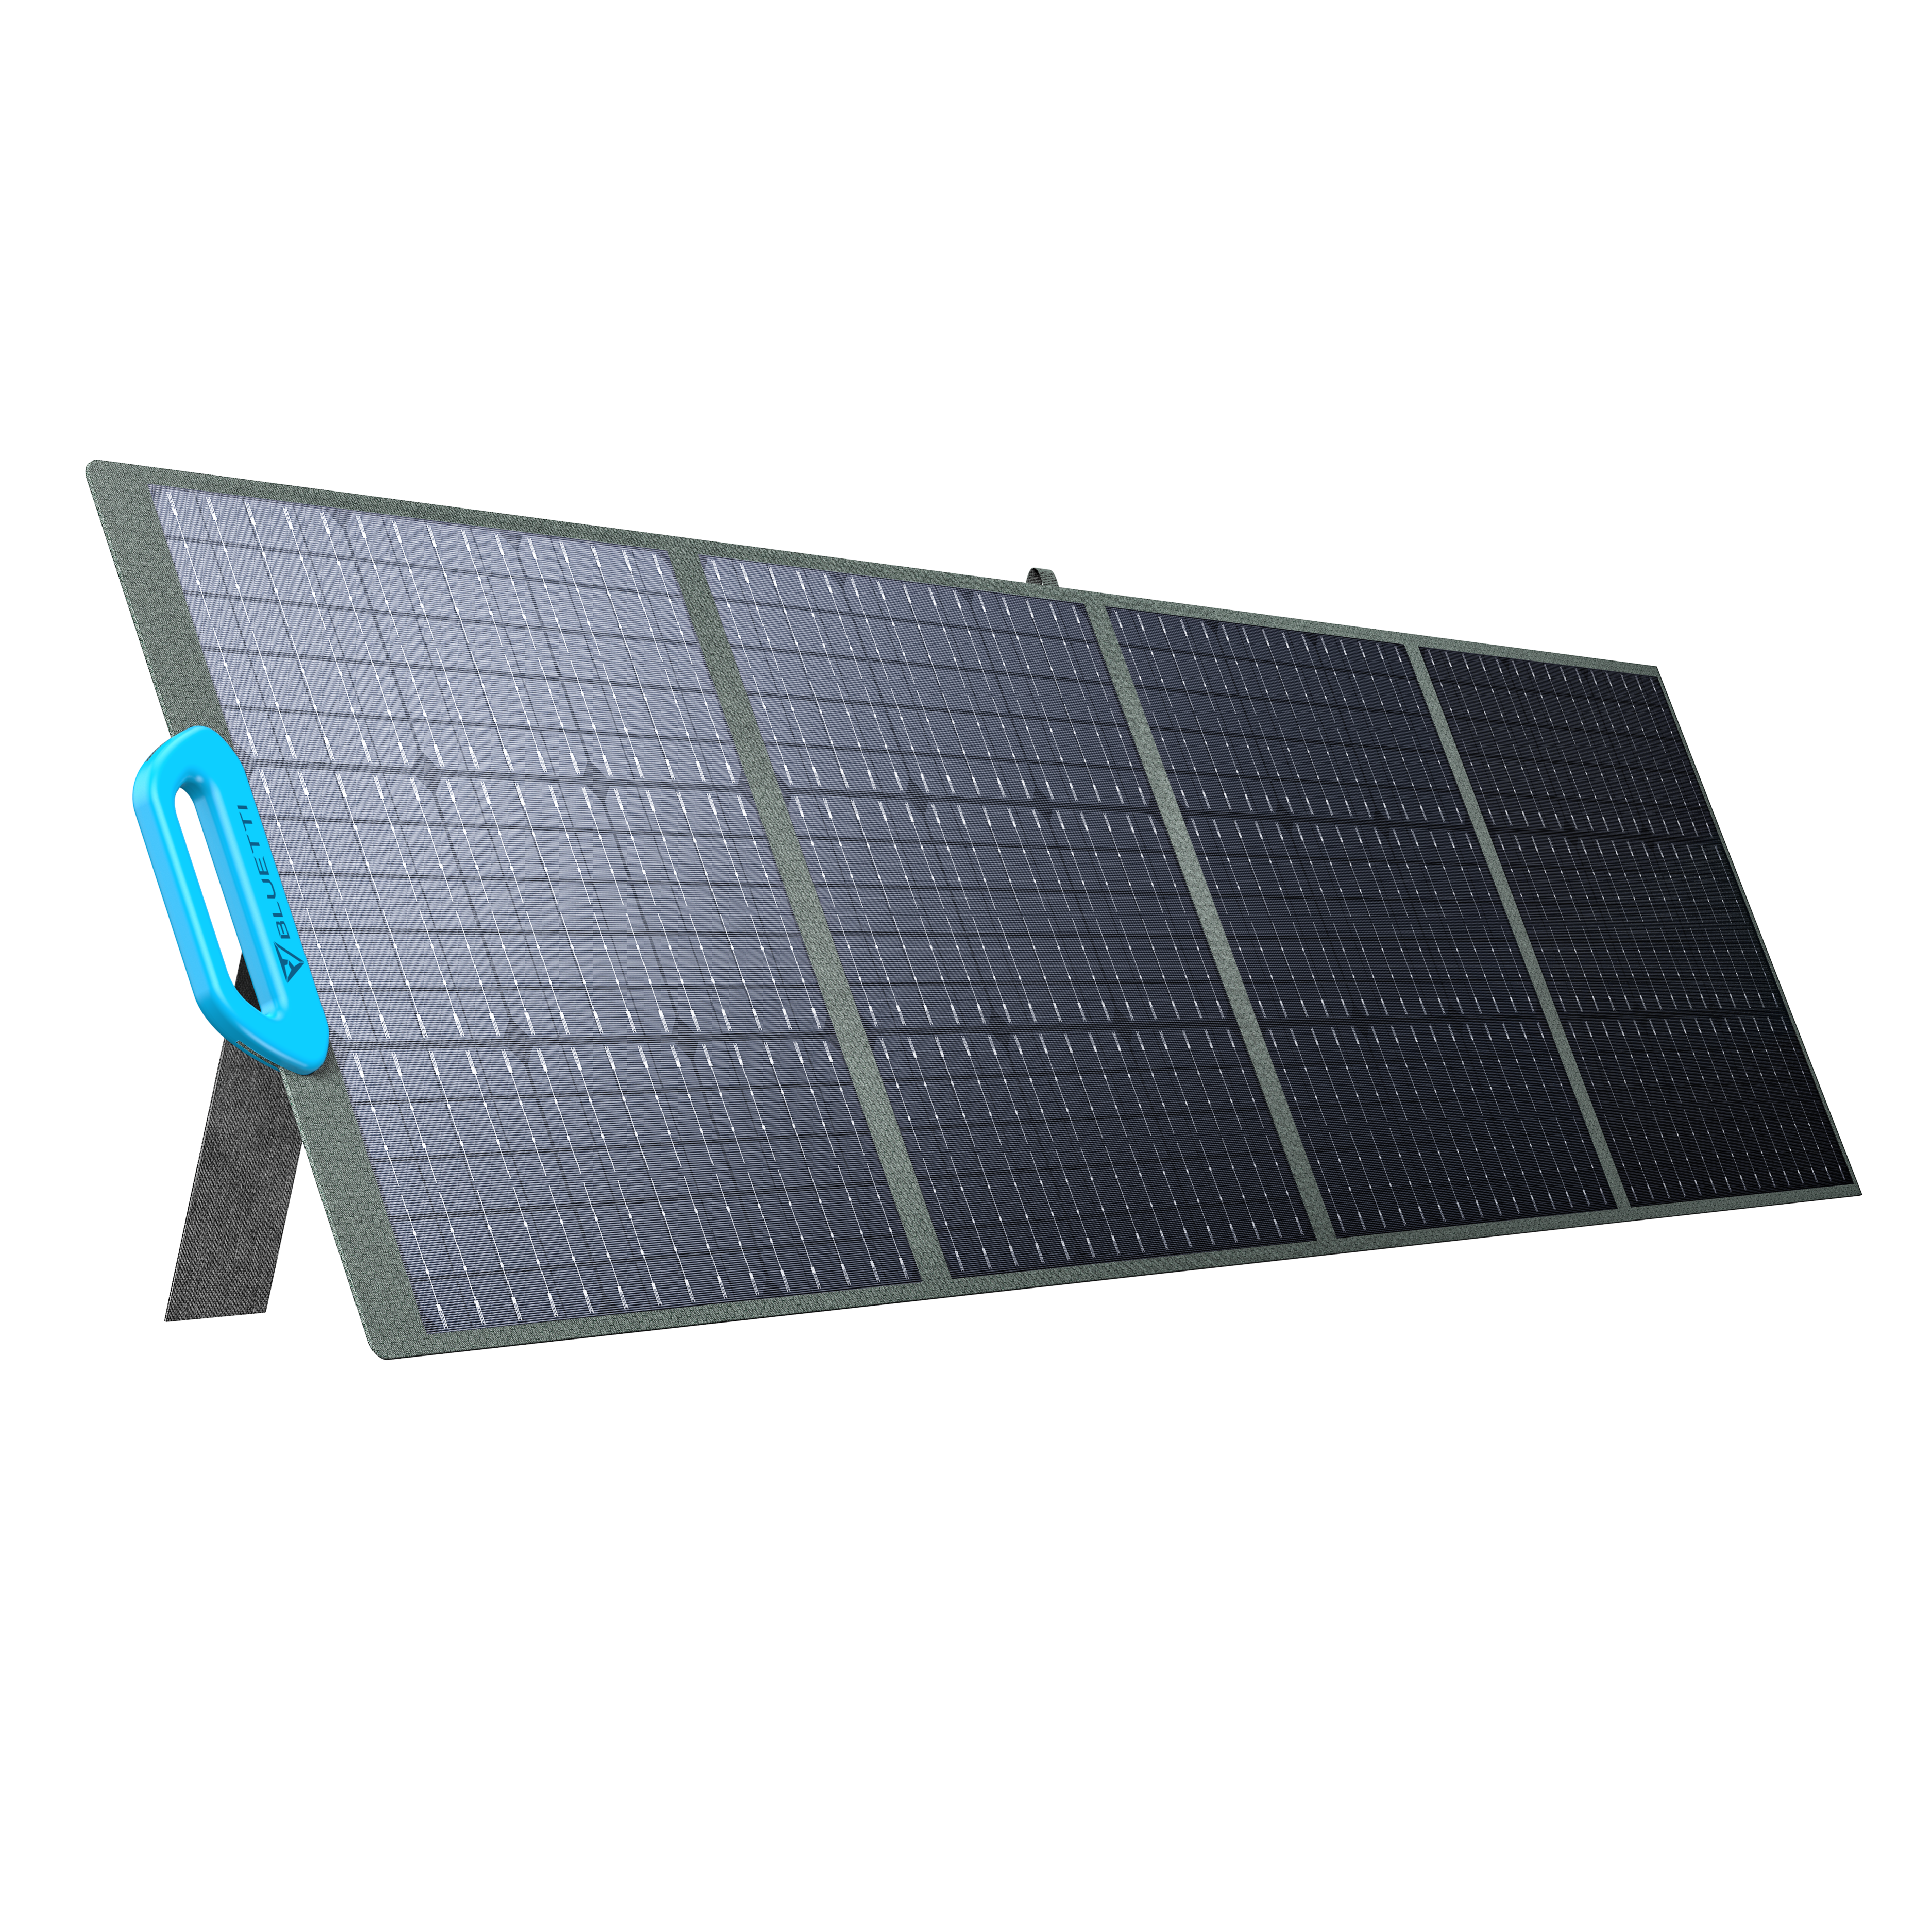 Bluetti PV200 Portable Solar Panel - Powerful Solar Energy for Outdoor Adventures